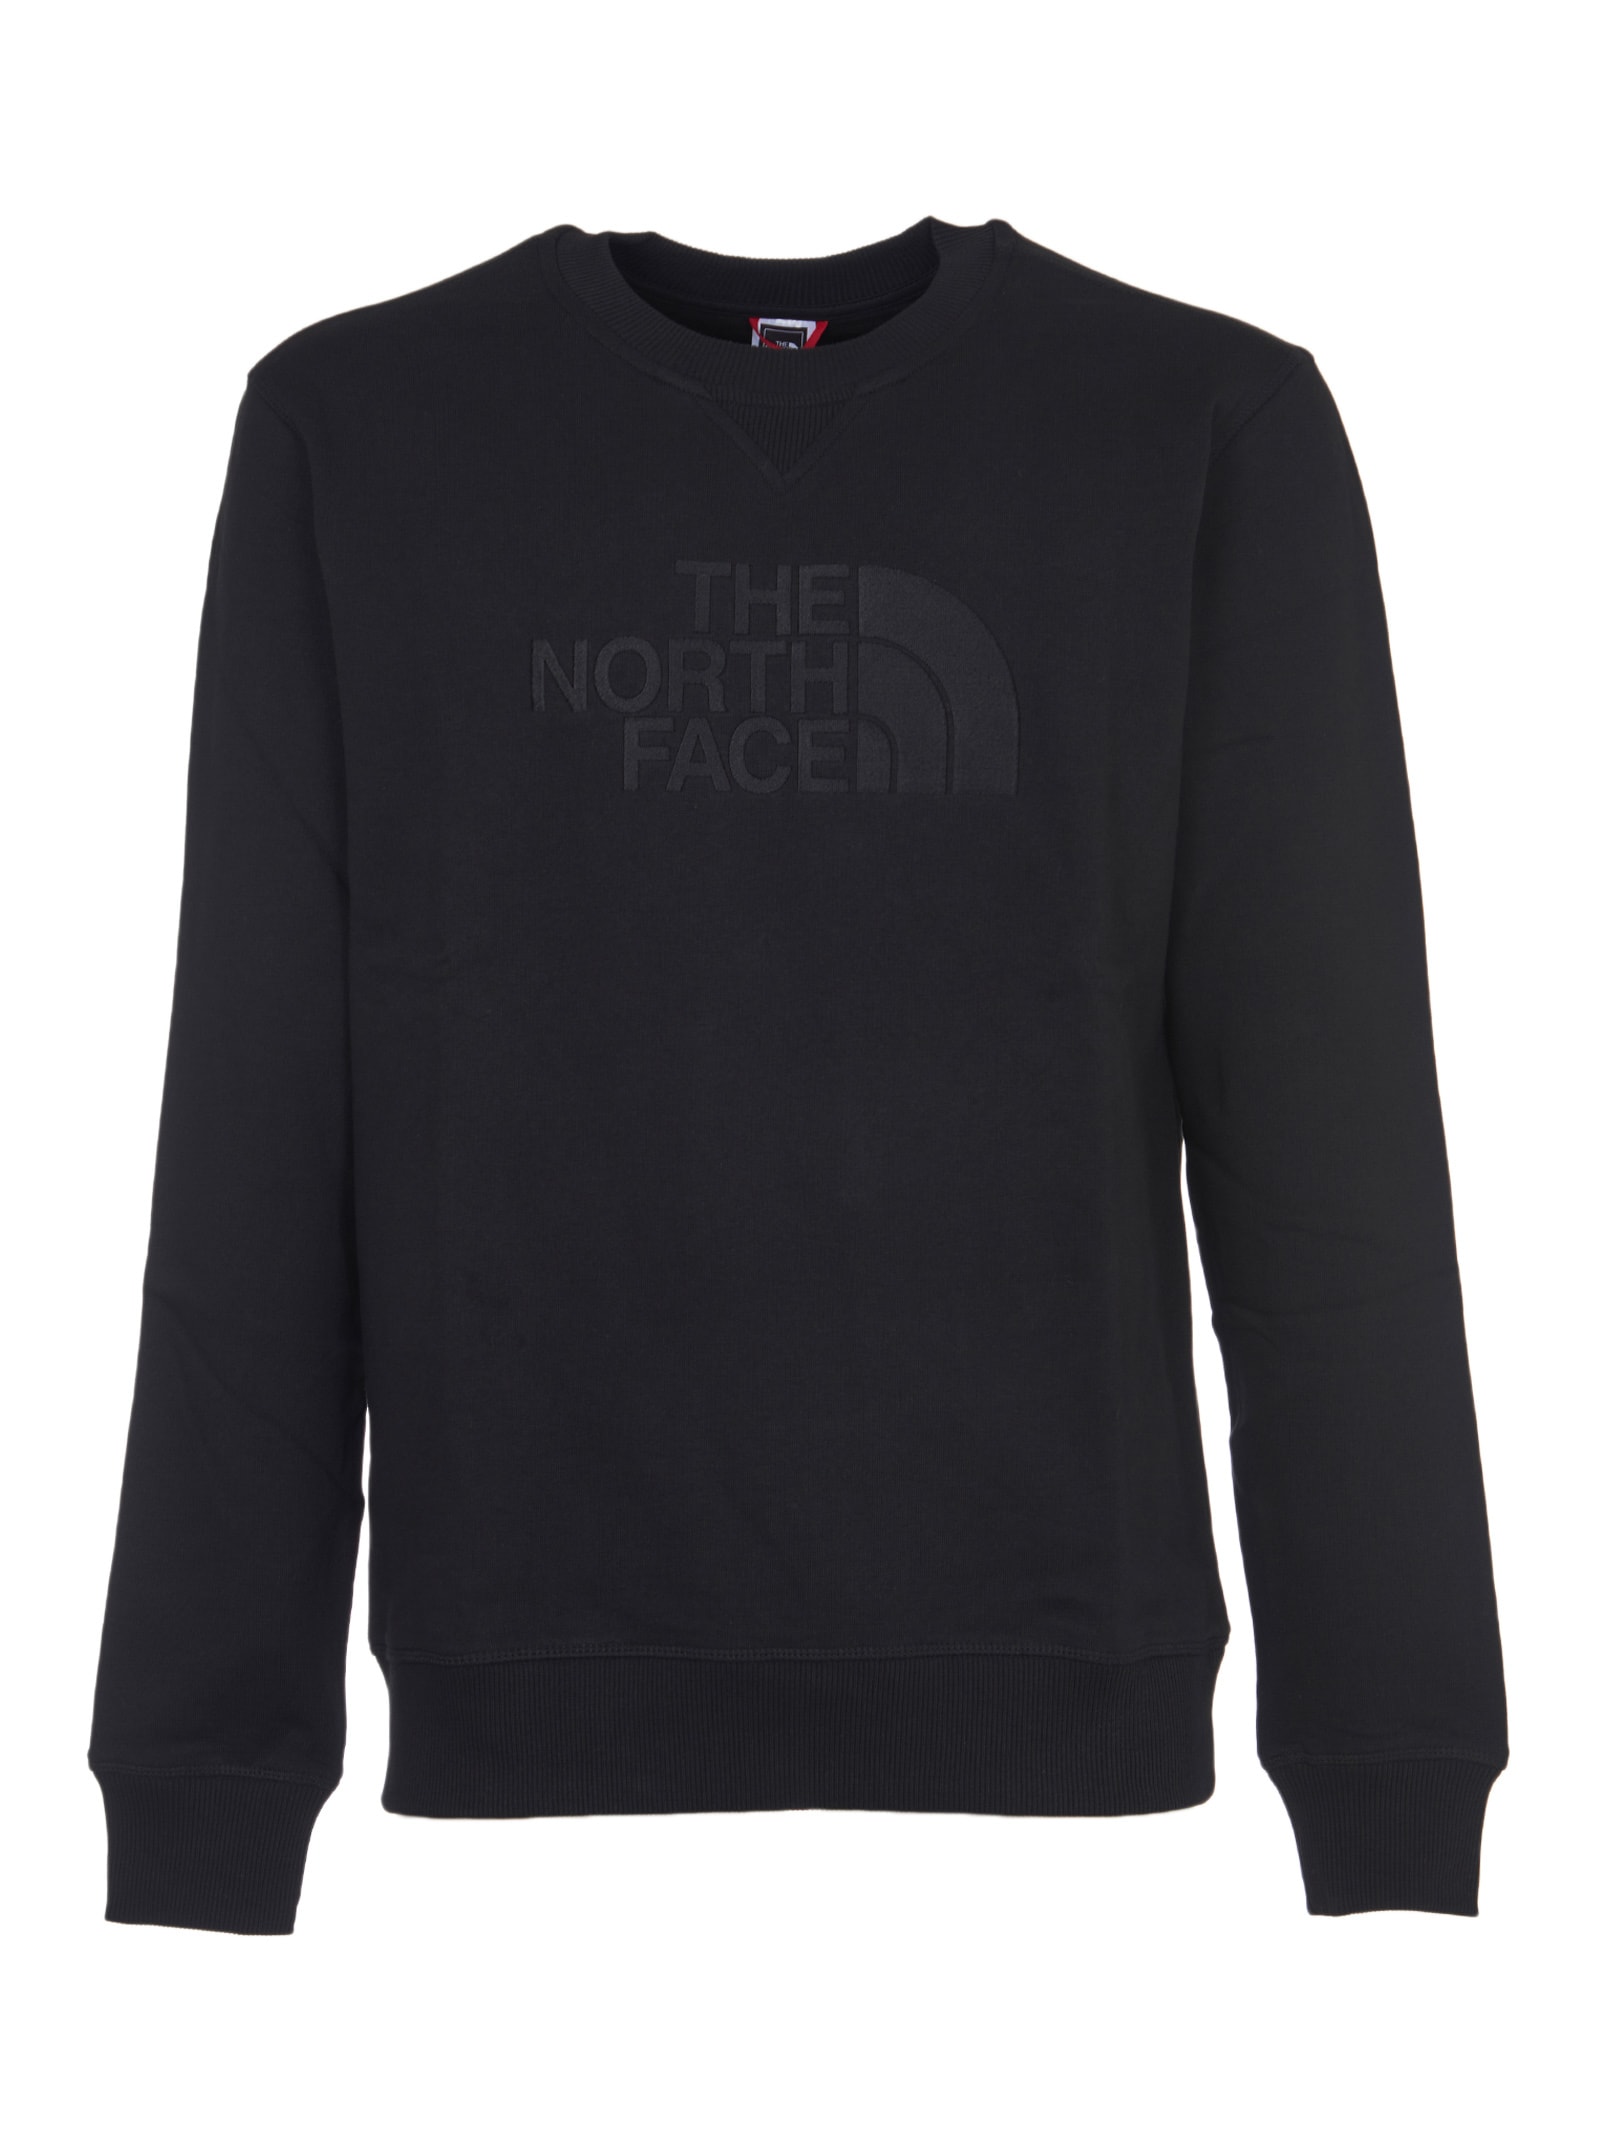 The North Face Black Sweatshirts